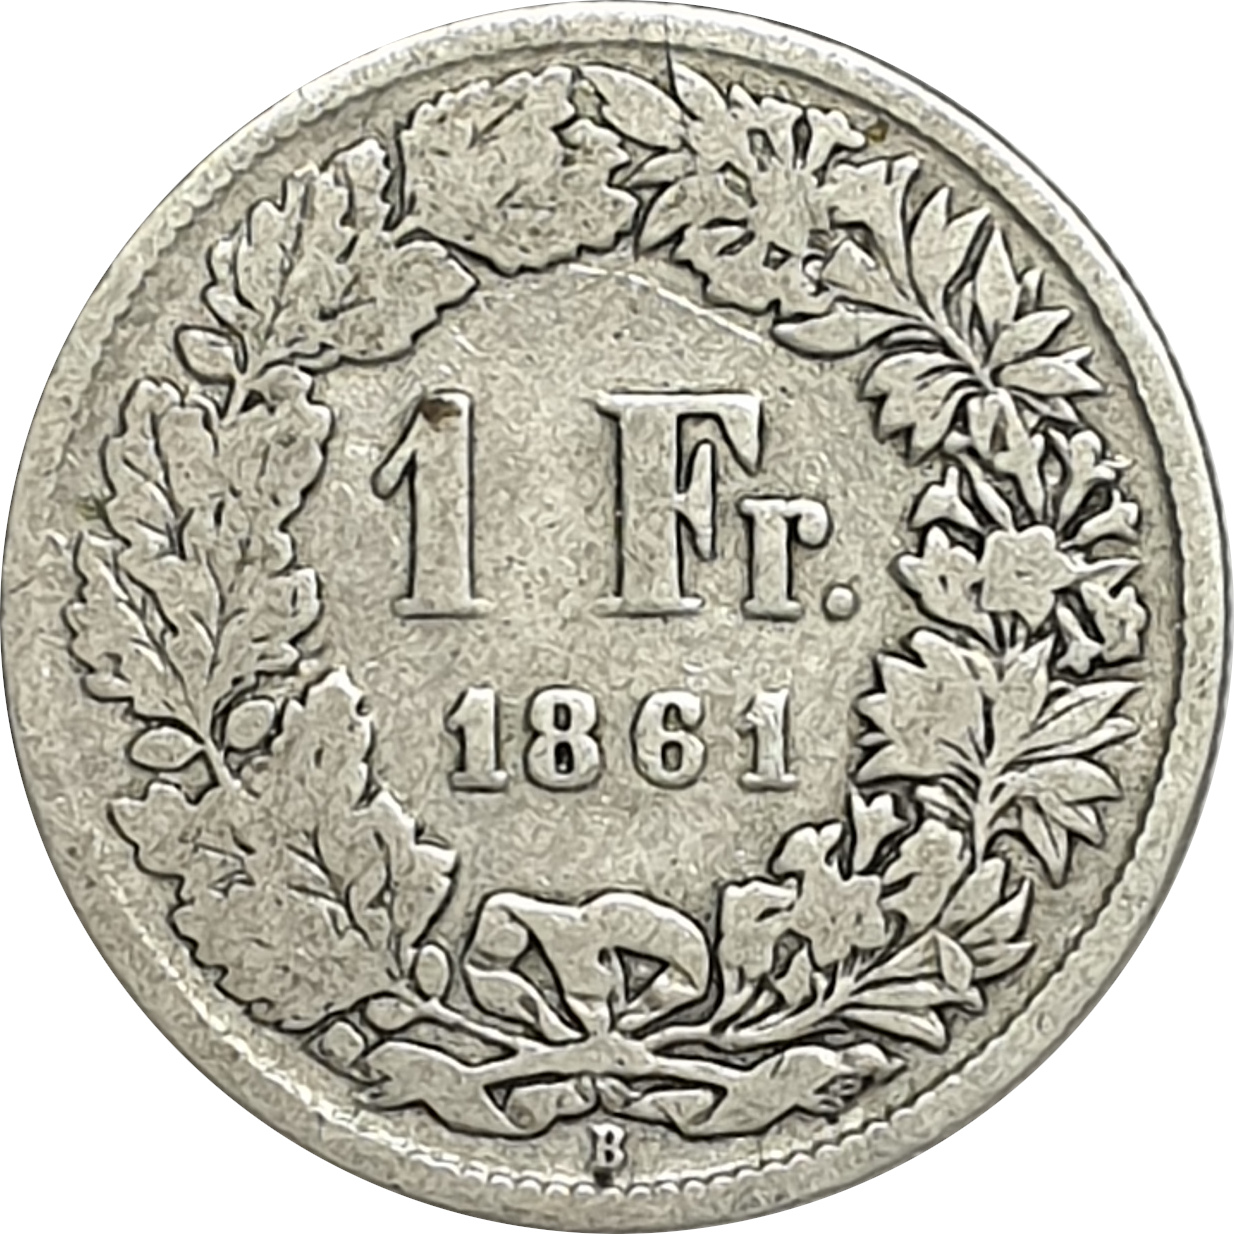 1 franc - Helvetia assise